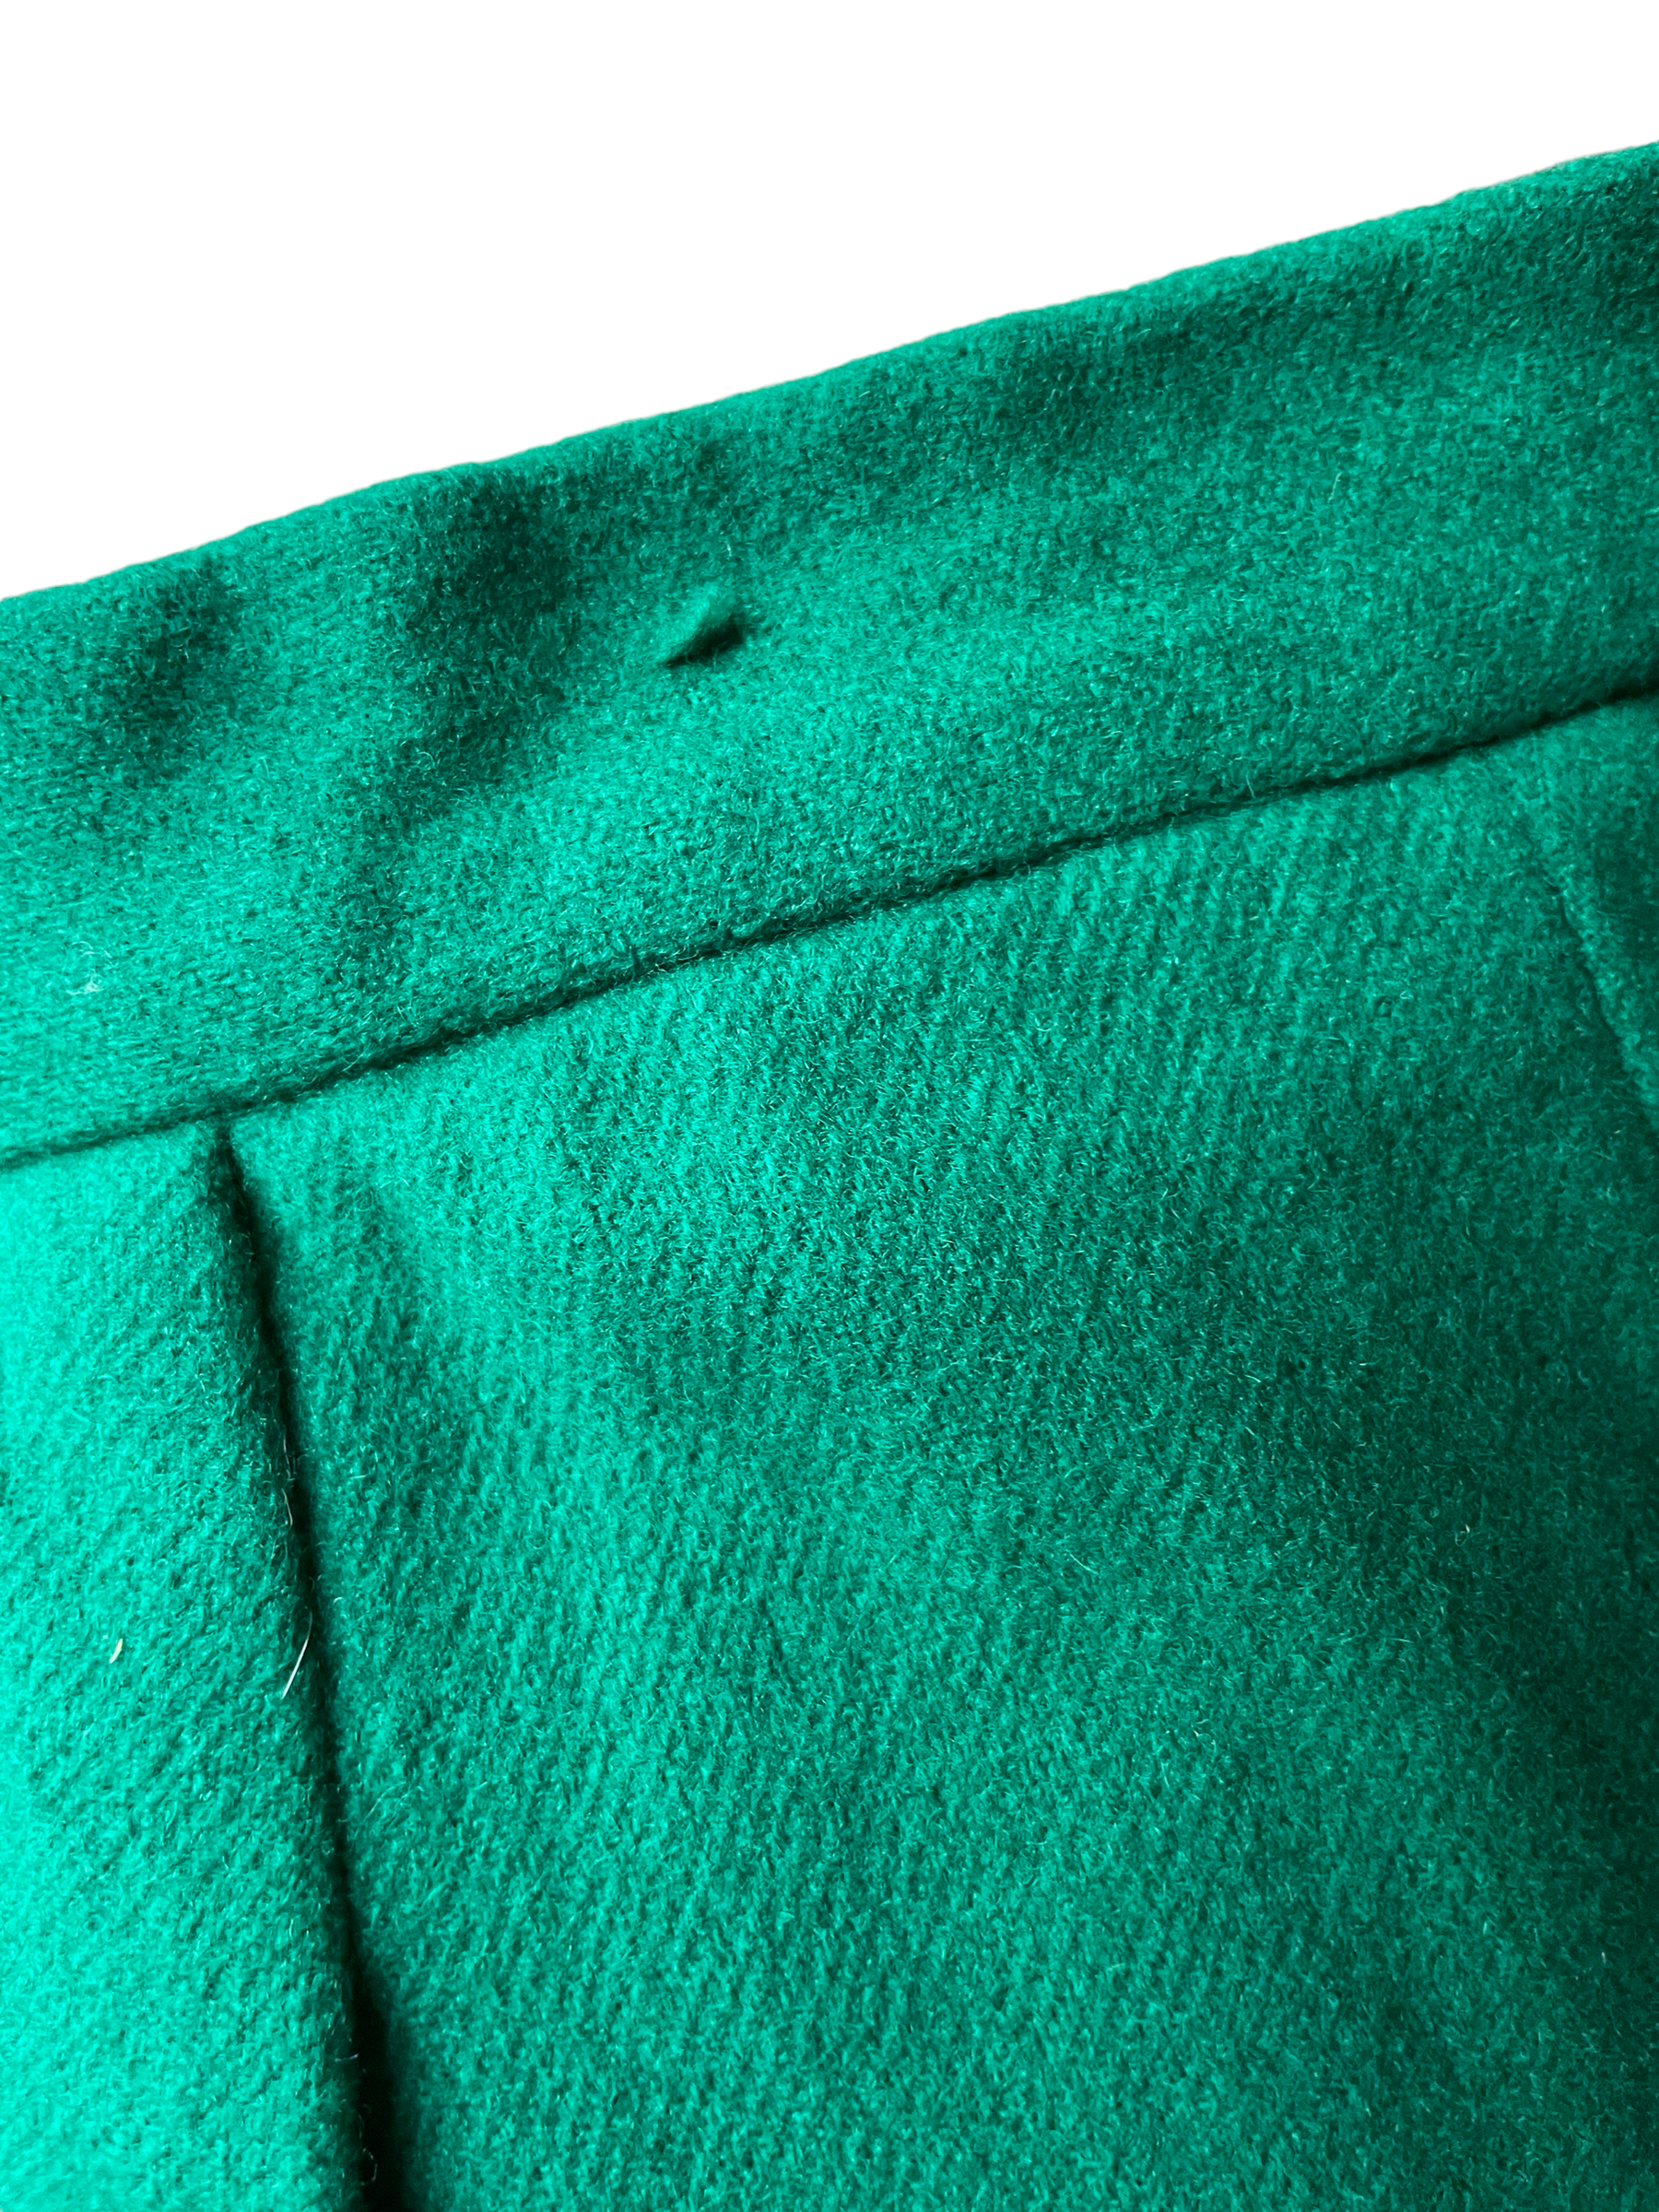 Small hole at waist Vintage 1960s Green Wool Pencil Skirt | Barn Owl Vintage | Seattle Vintage Skirts